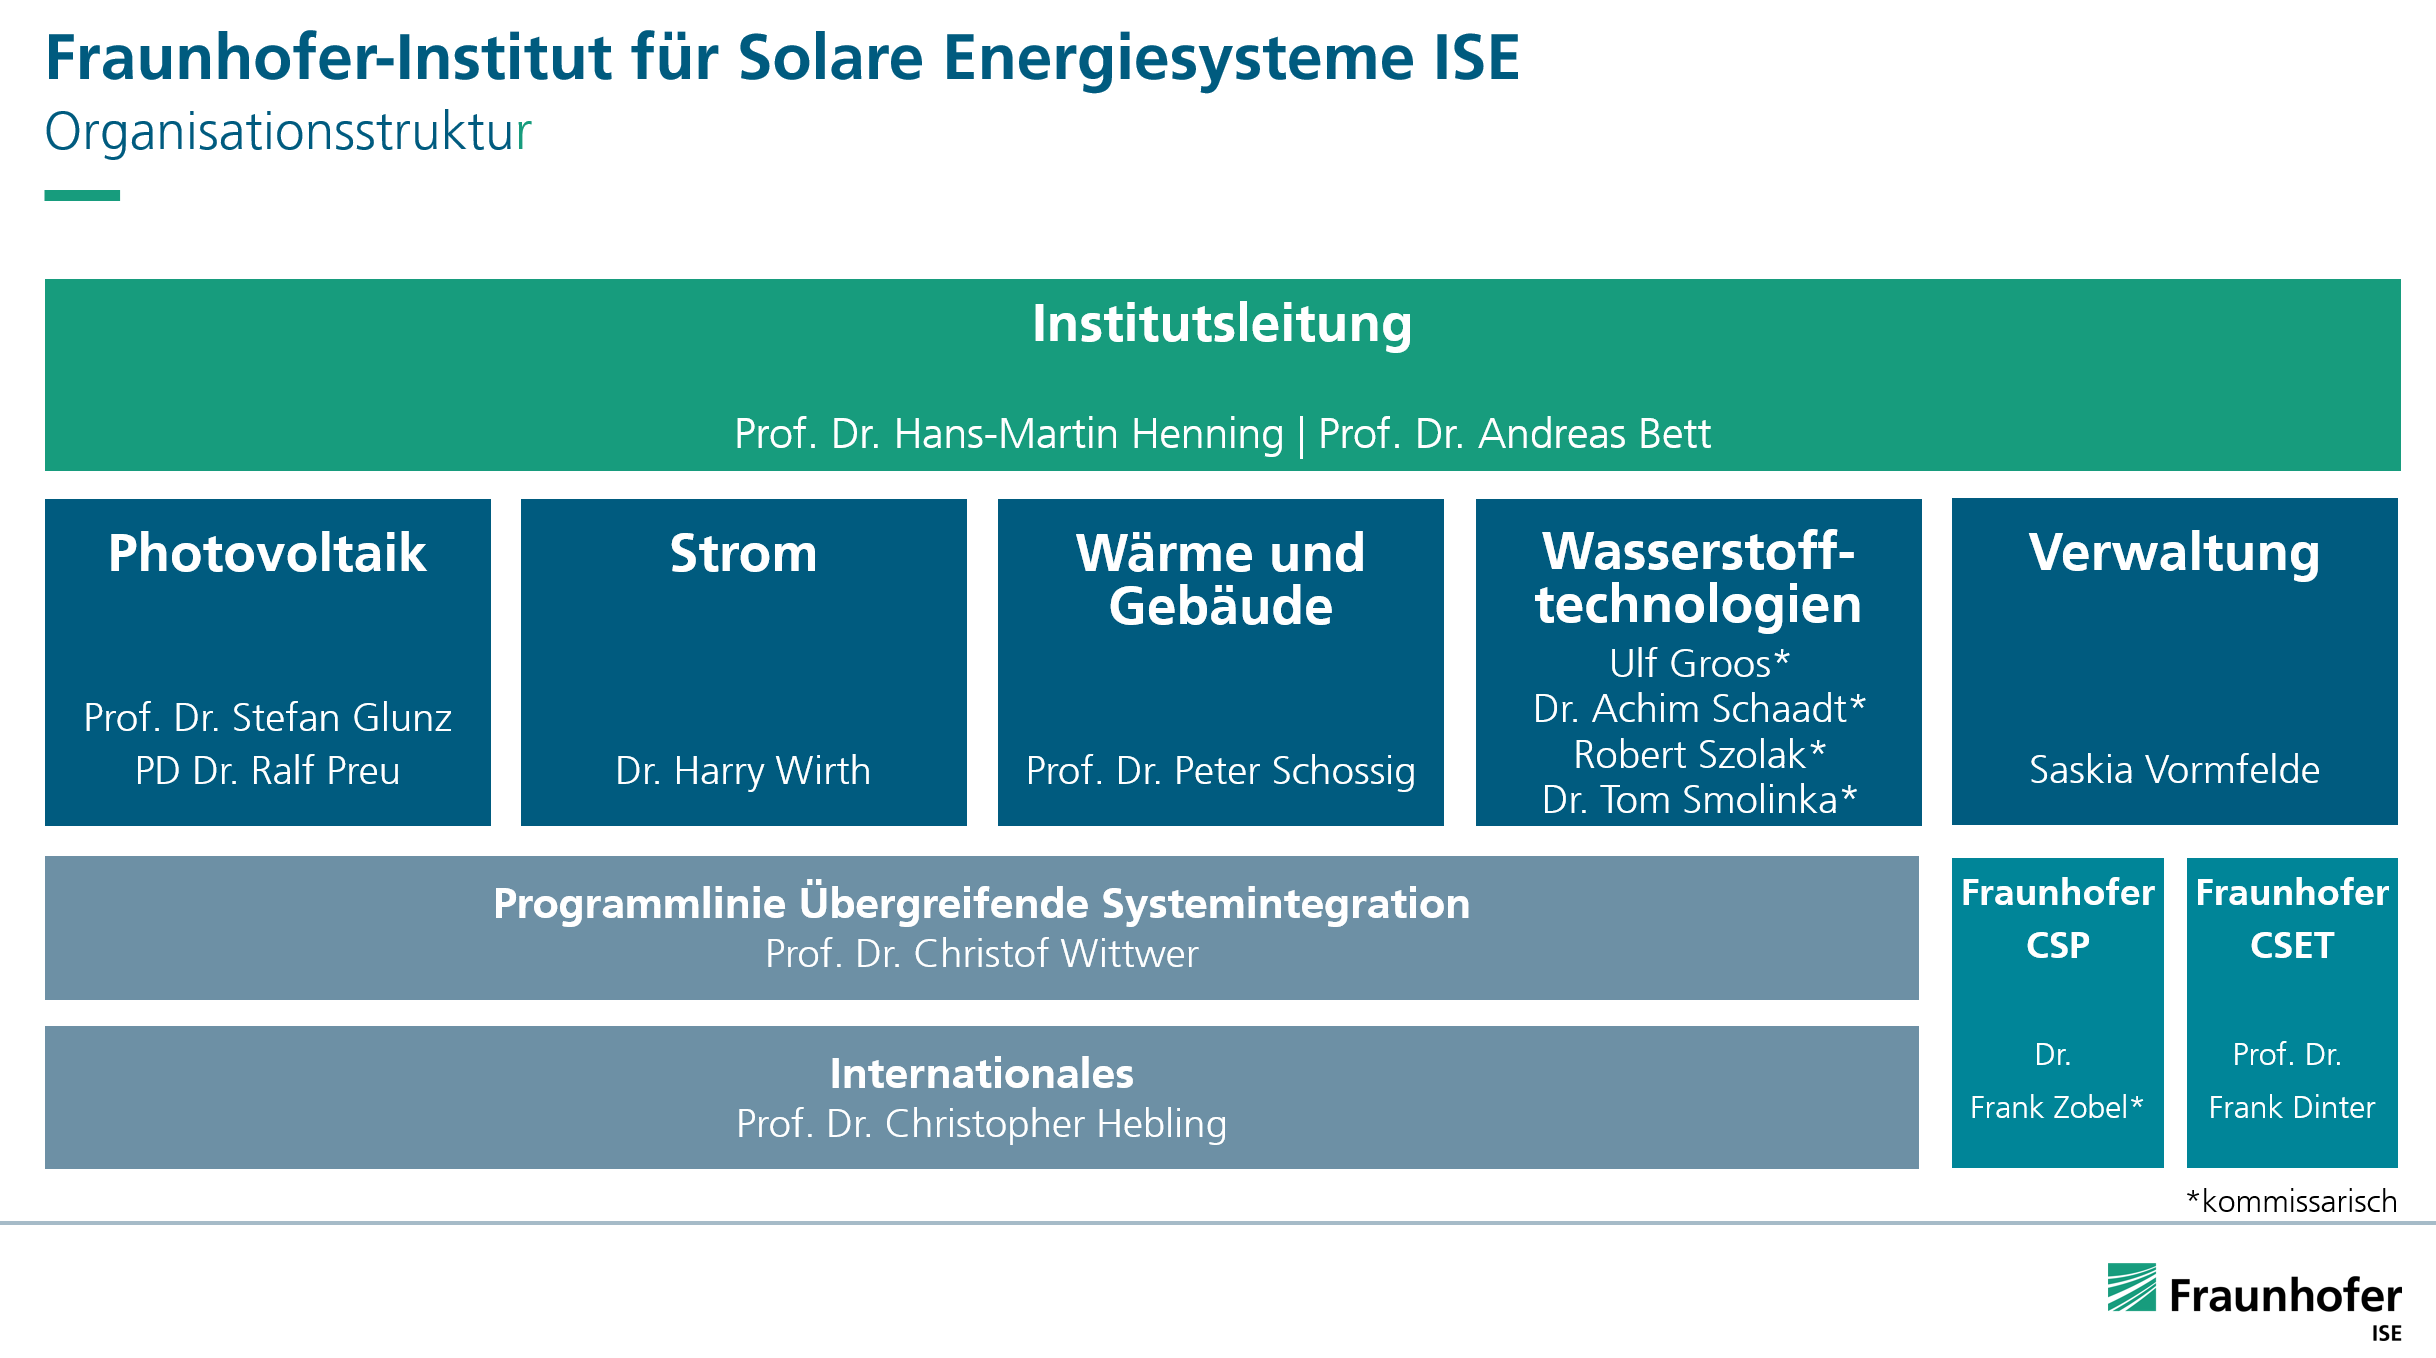 Organisationsstruktur des Fraunhofer ISE